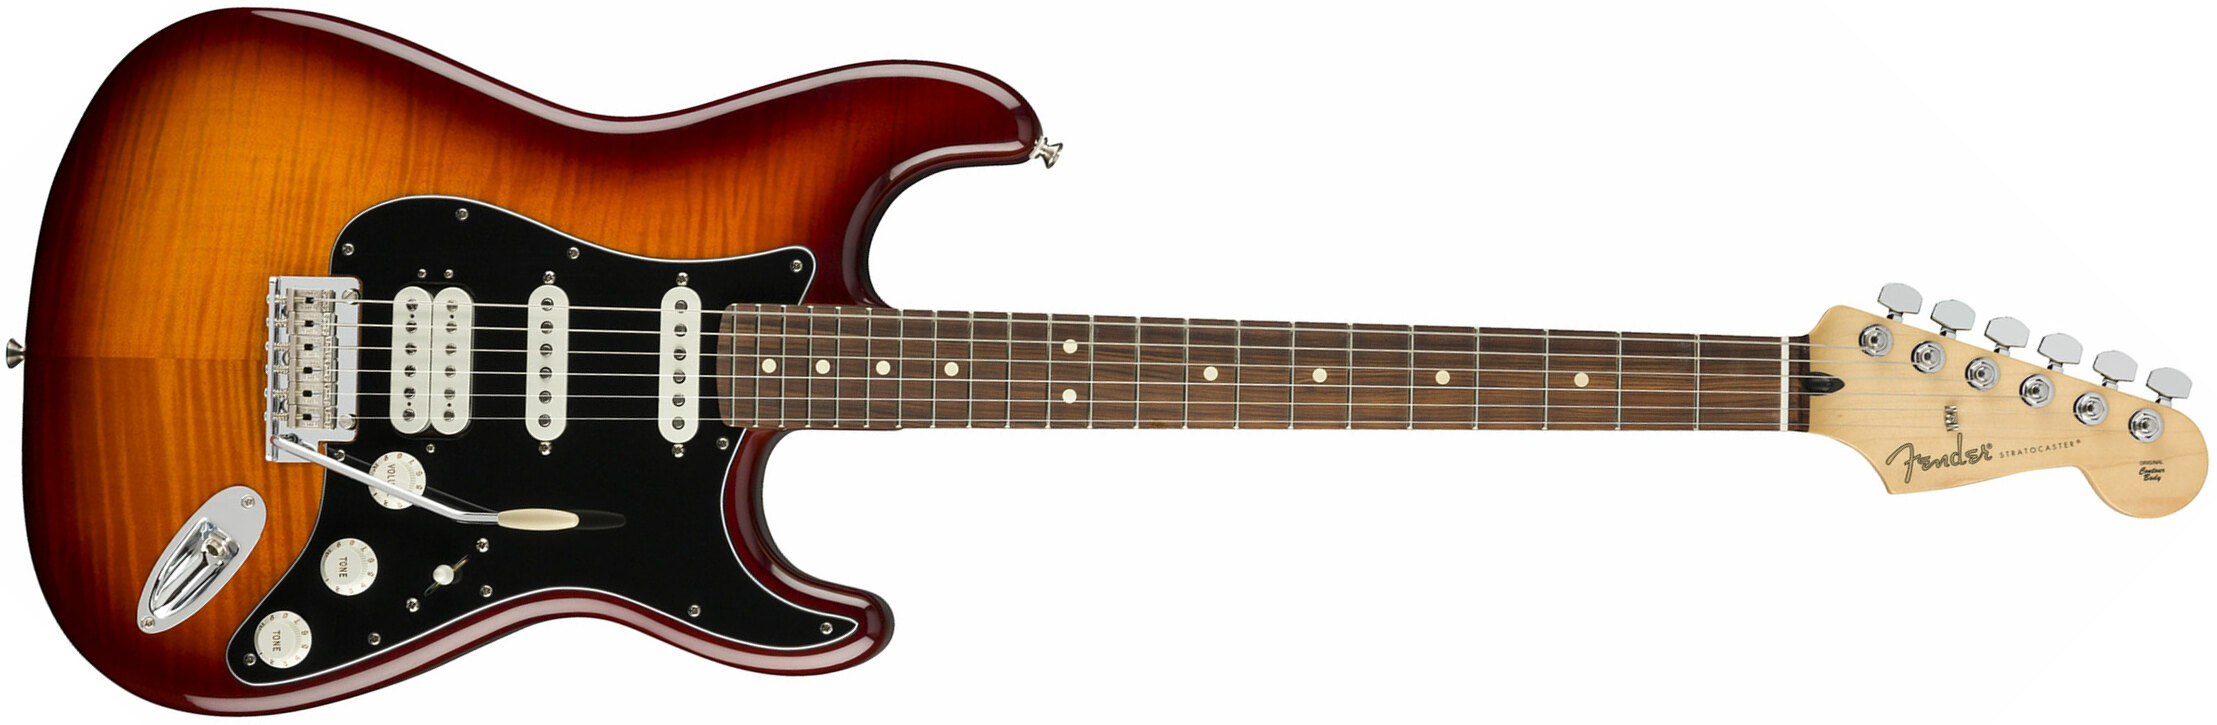 Fender Strat Player Plus Top Mex Hss Pf - Tobacco Burst - Str shape electric guitar - Main picture